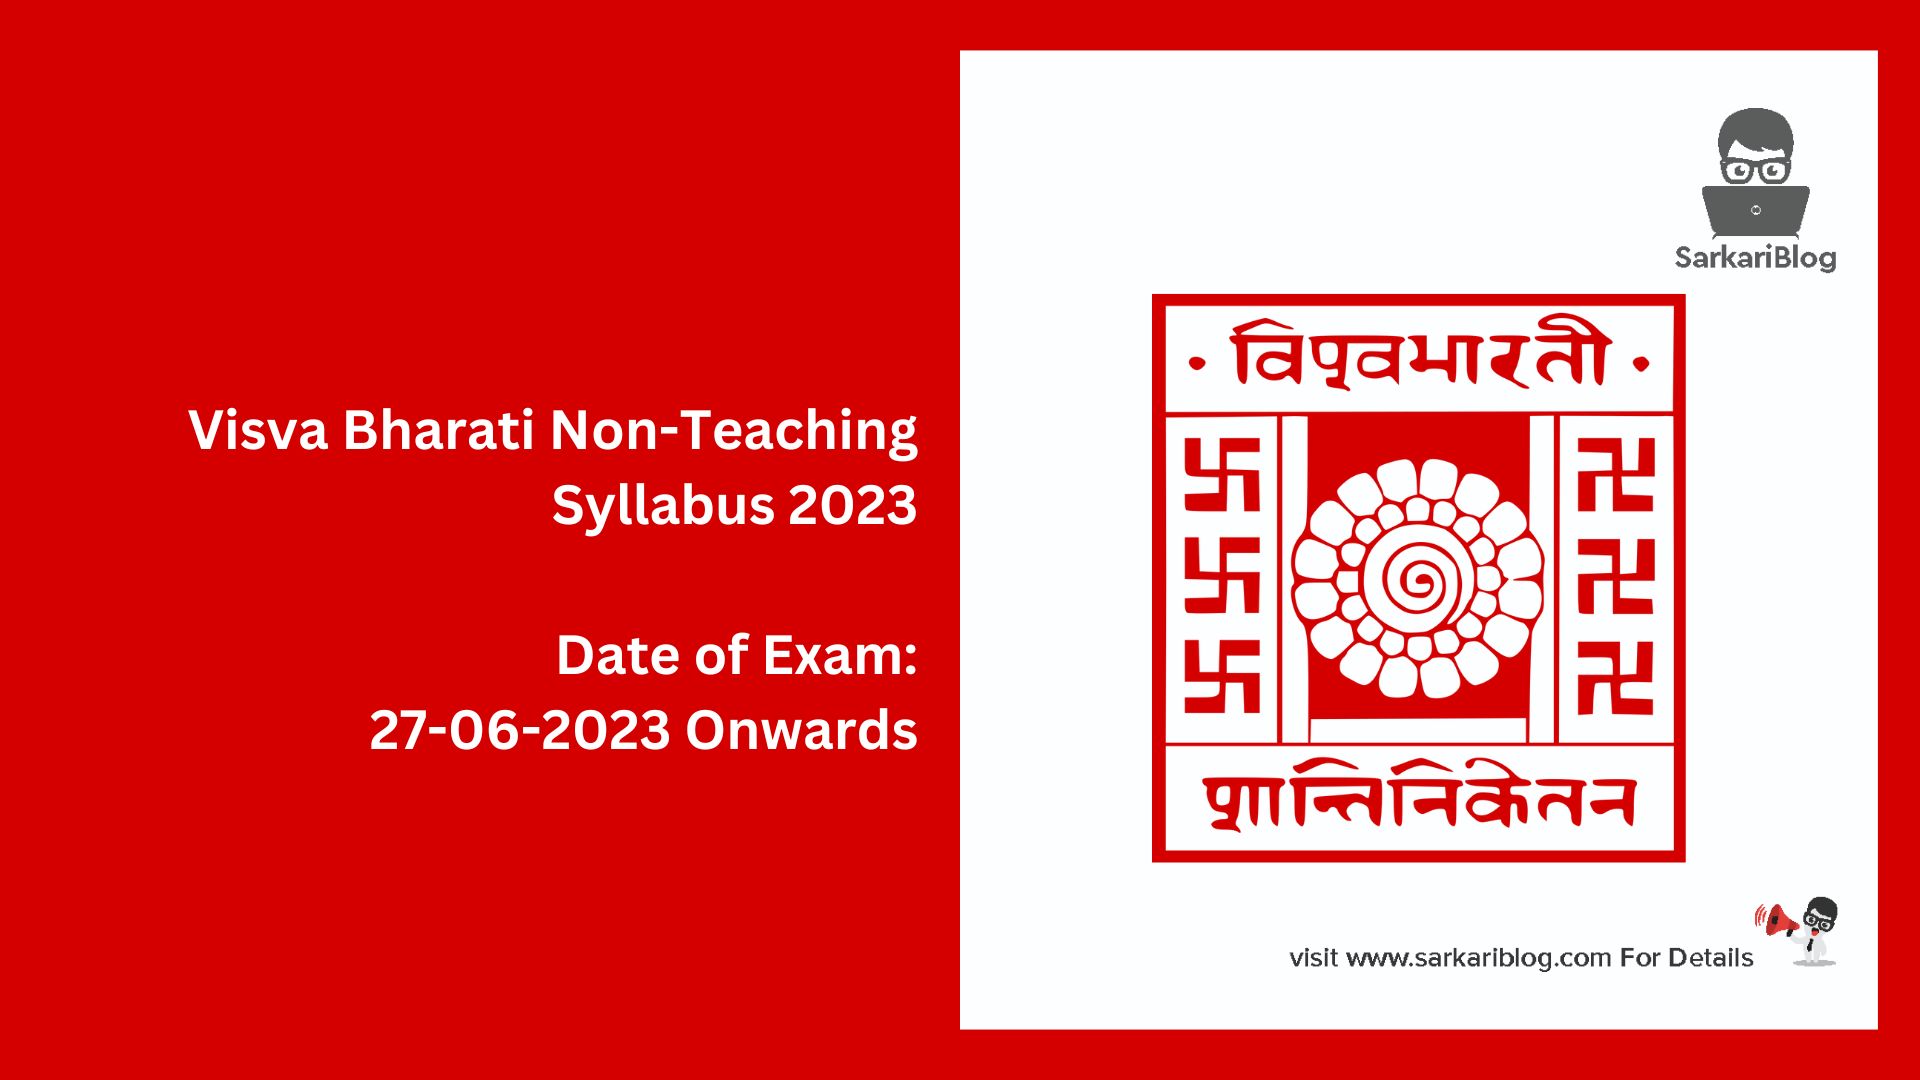 Visva Bharati Non-Teaching Syllabus 2023